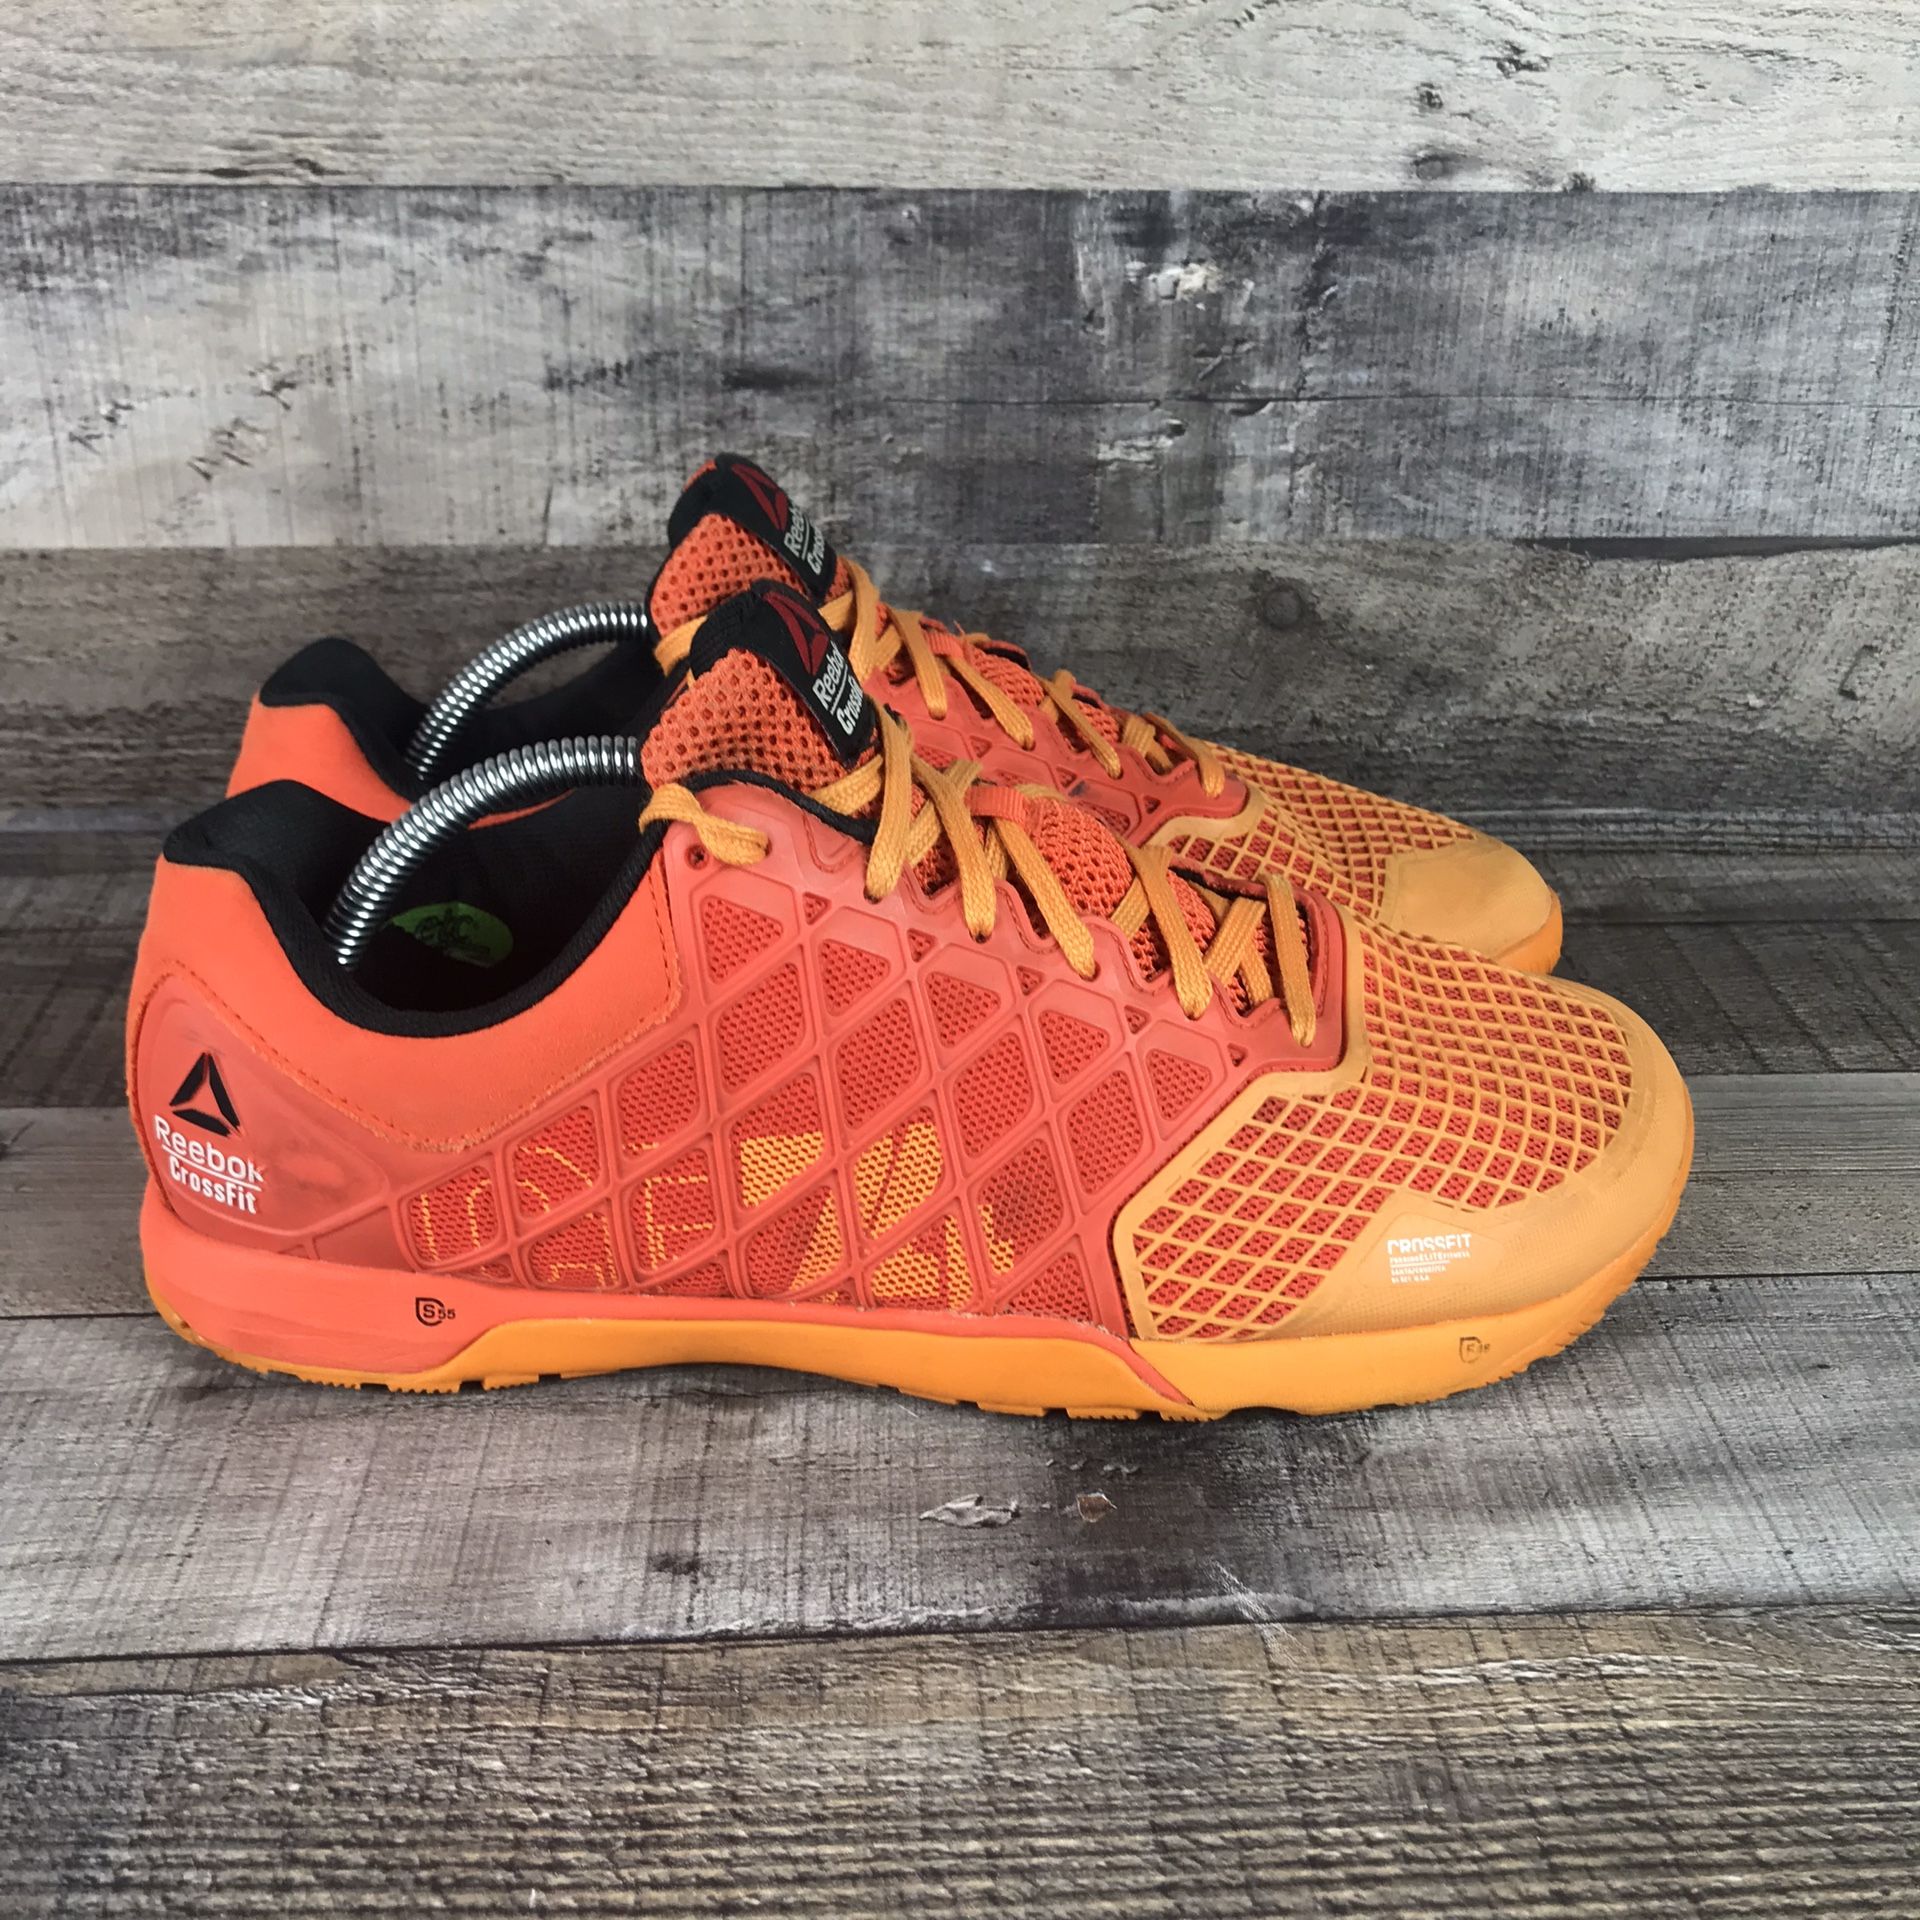 Reebok Nano 4.0 CrossFit Orange Mesh Training Shoes Men’s Size 11.5